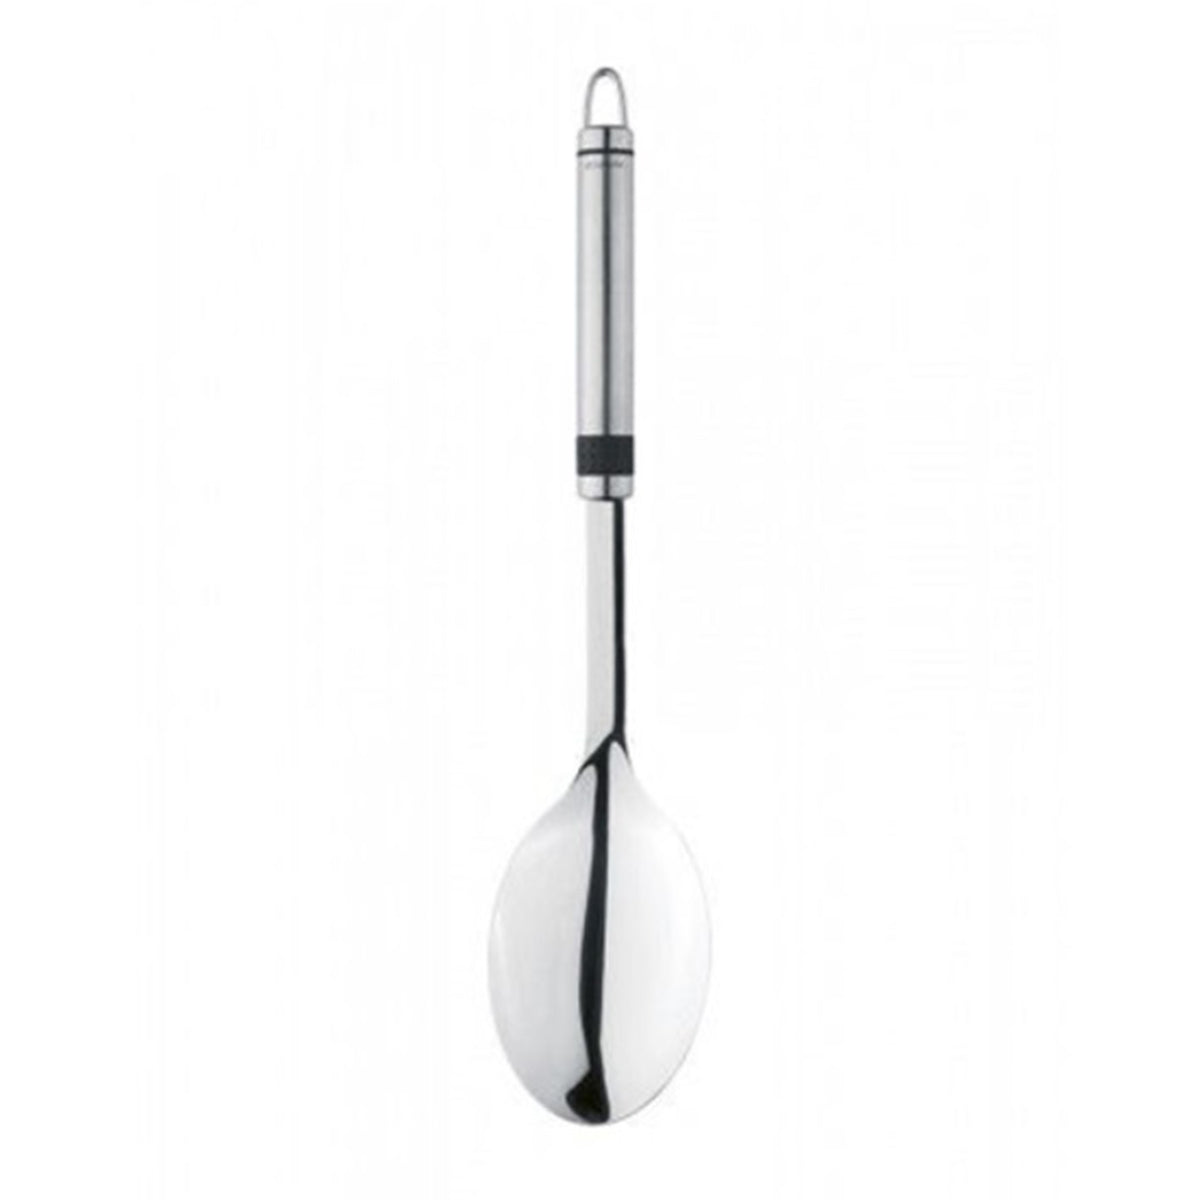 Serving Spoon, SilverSize: 32 cm